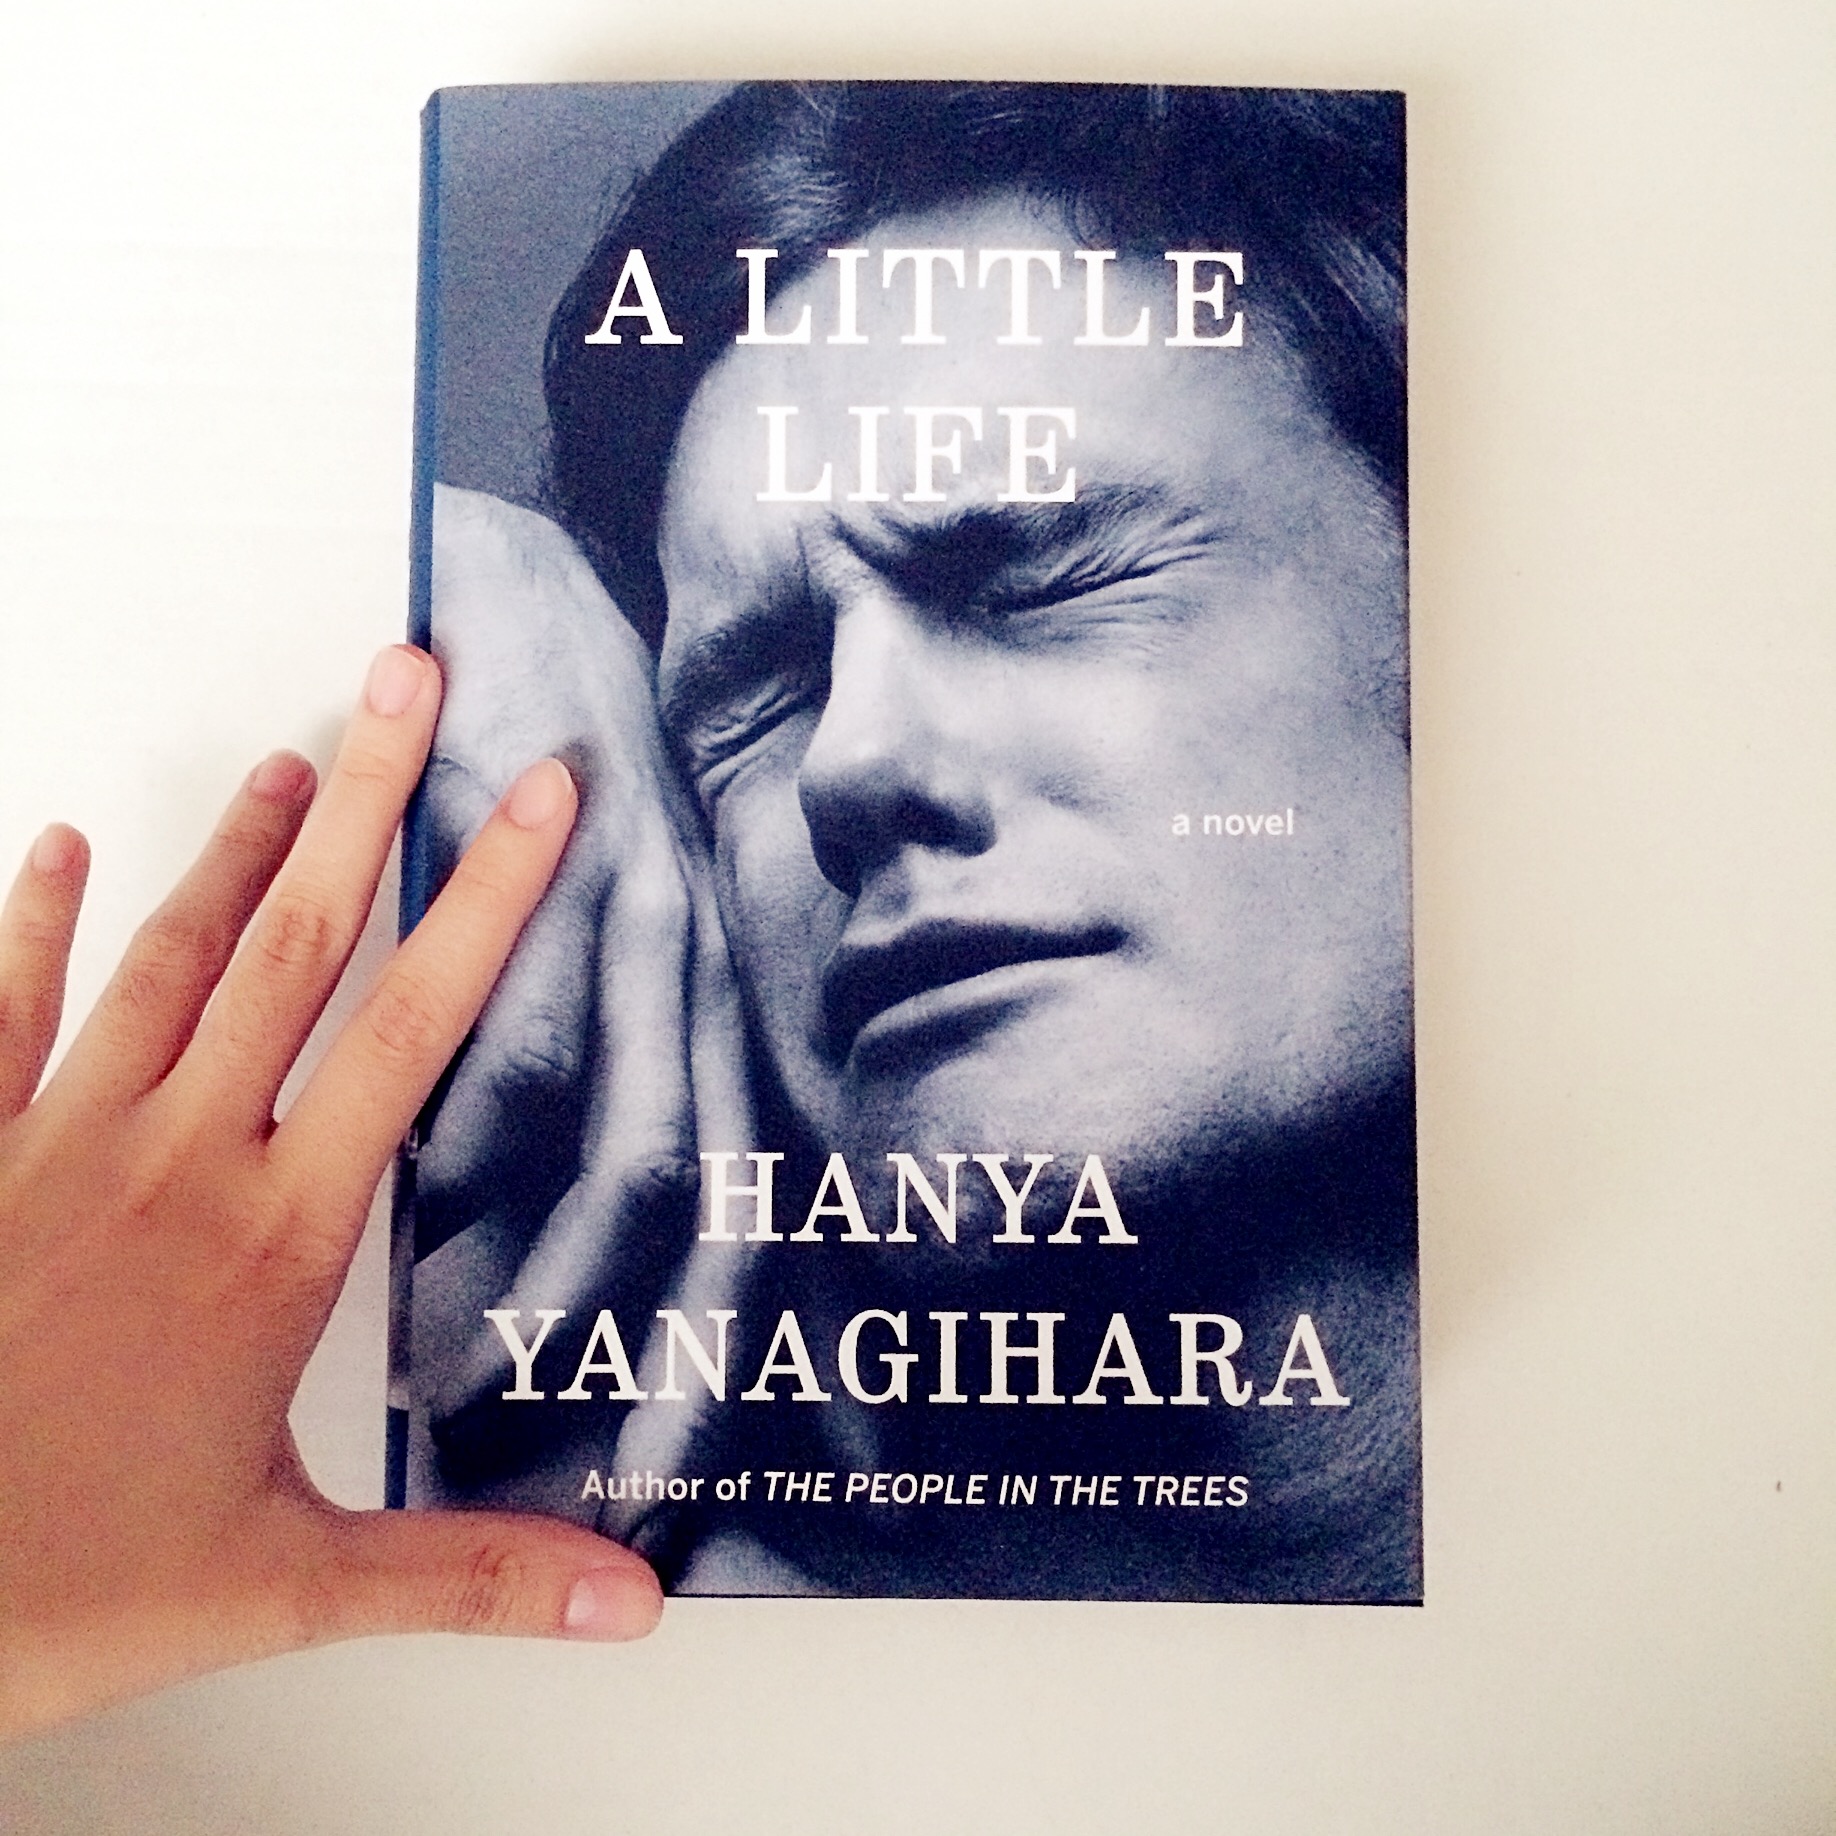 A little life книга. Маленькая жизнь Ханья Янагихара. Маленькая жизнь Ханья Янагихара герои книги. Маленькая жизнь книга арты.